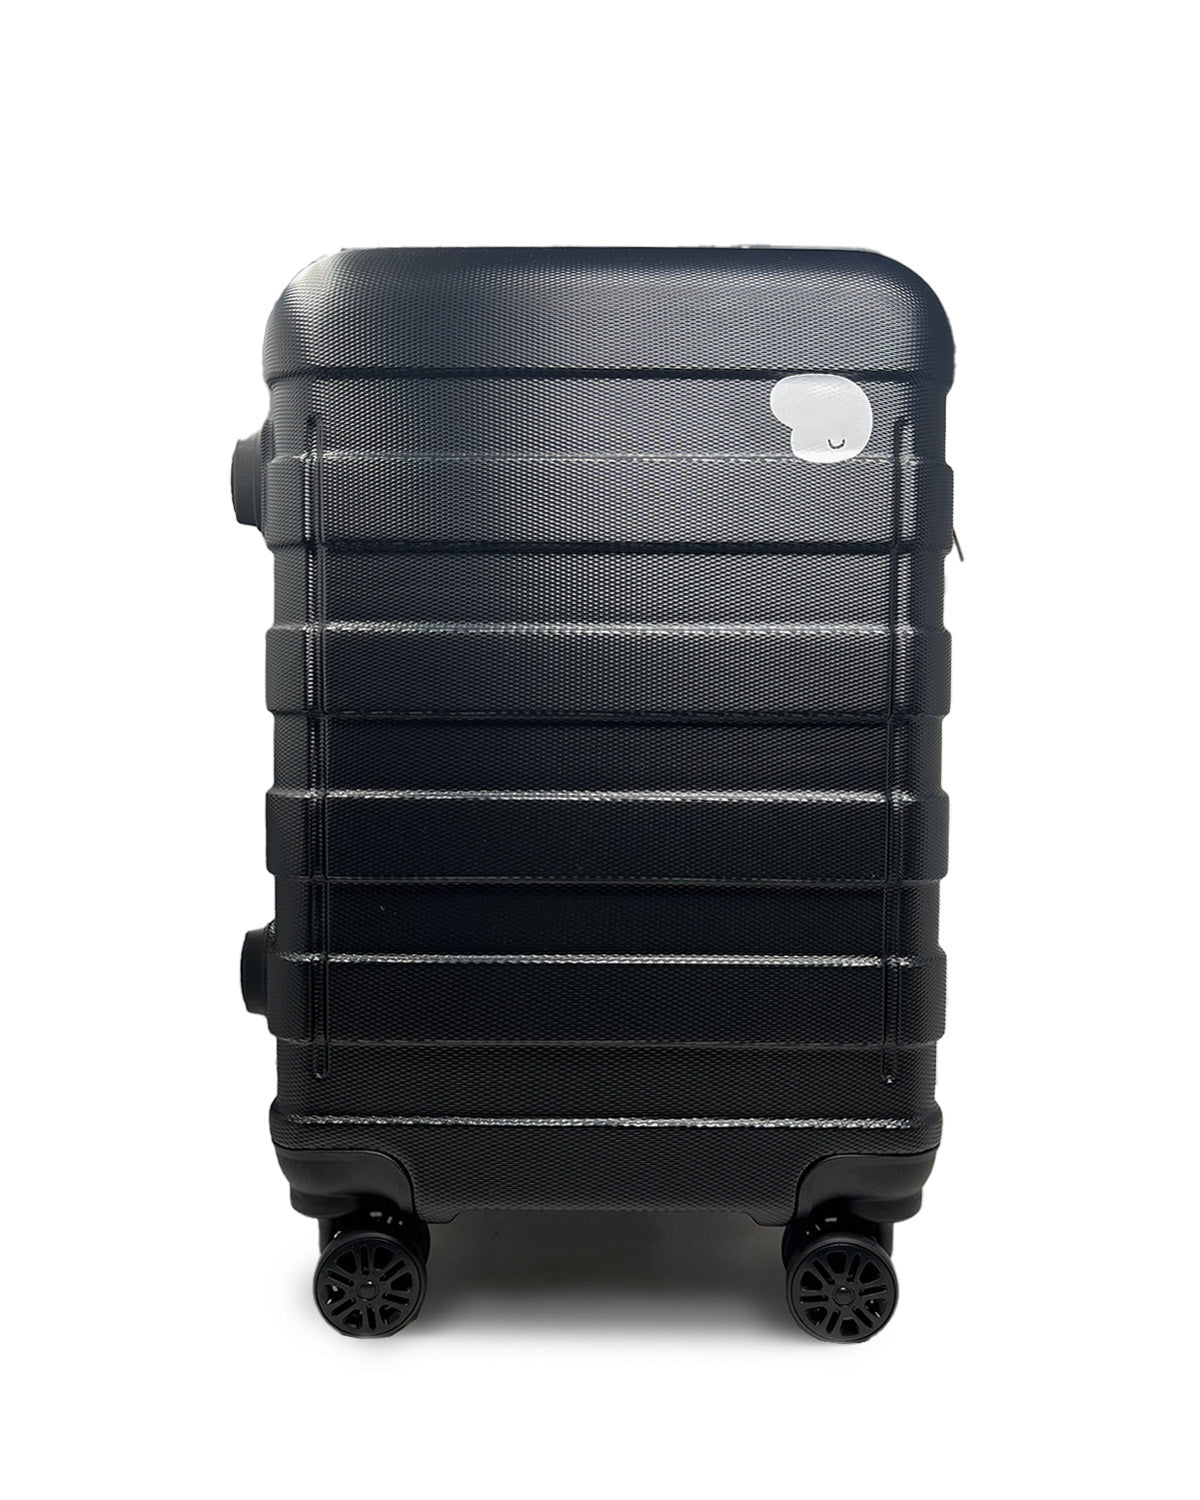 OCOMMO Lightweight Hardshell Luggage